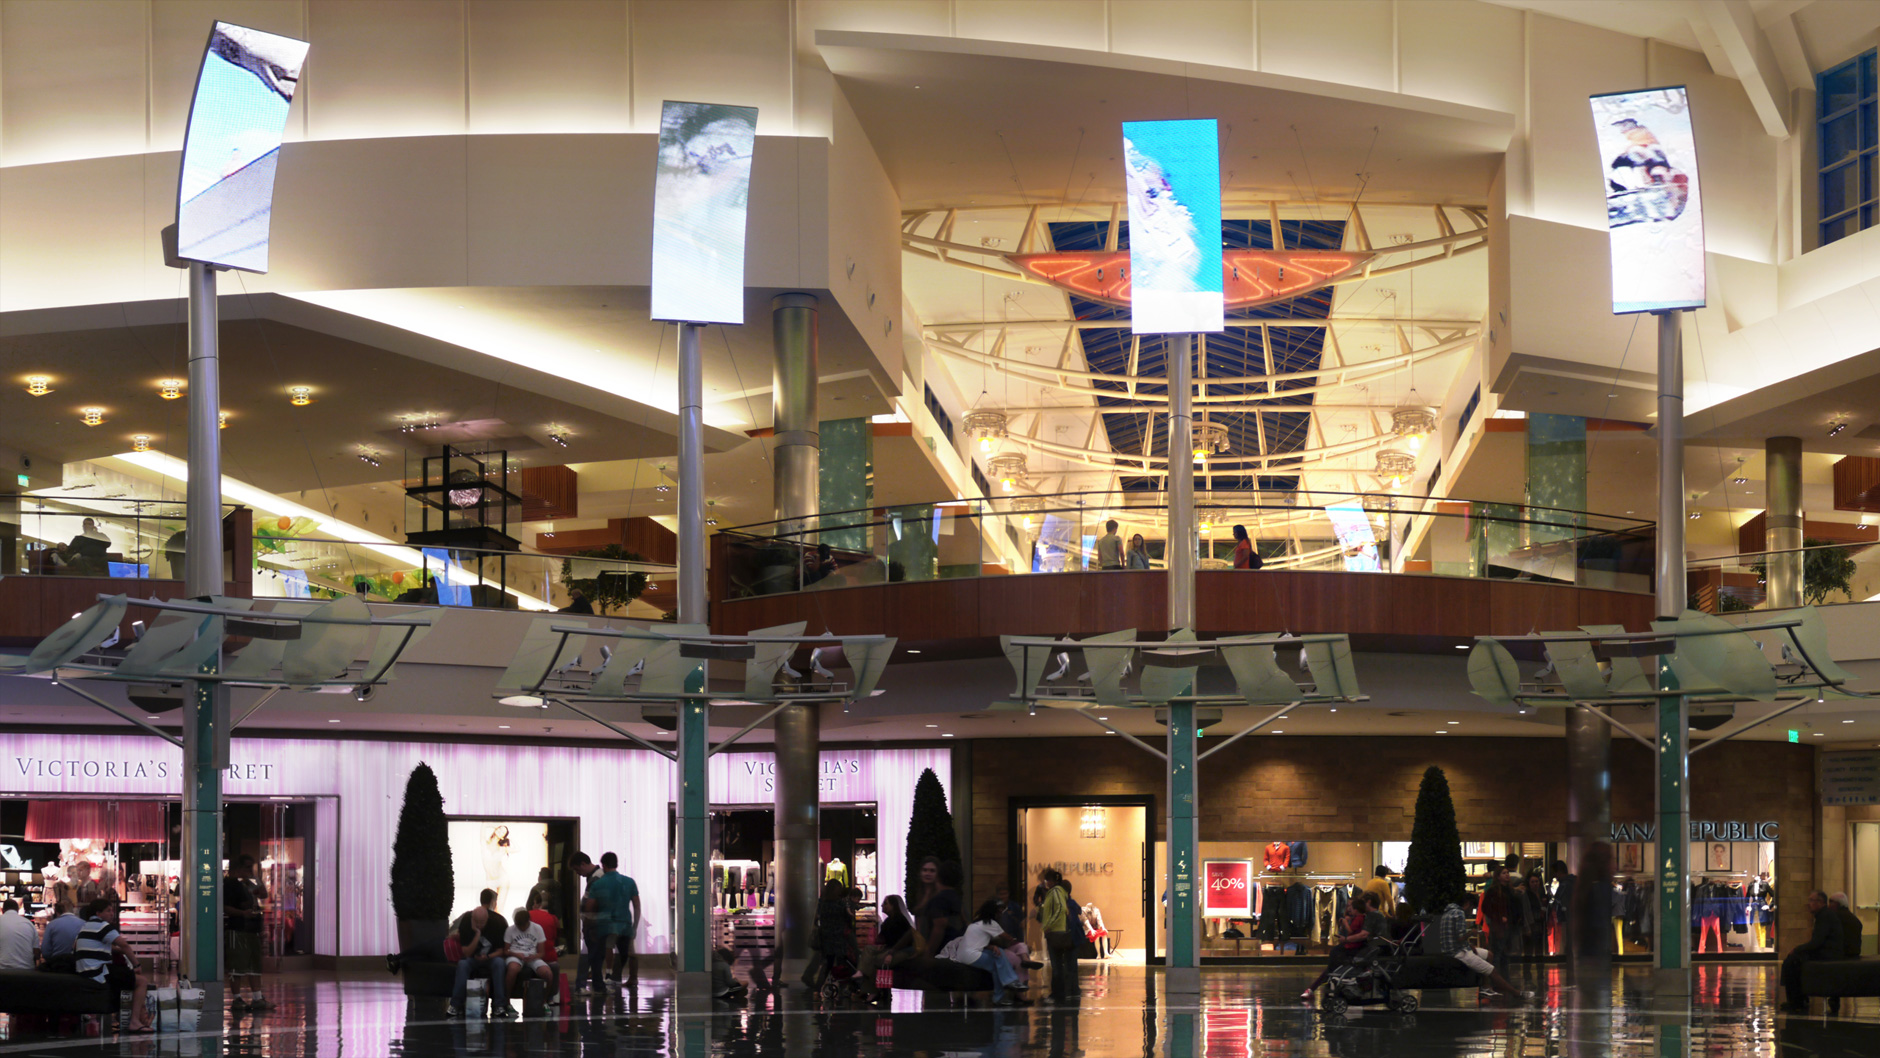 Mall at Millenia Video Display